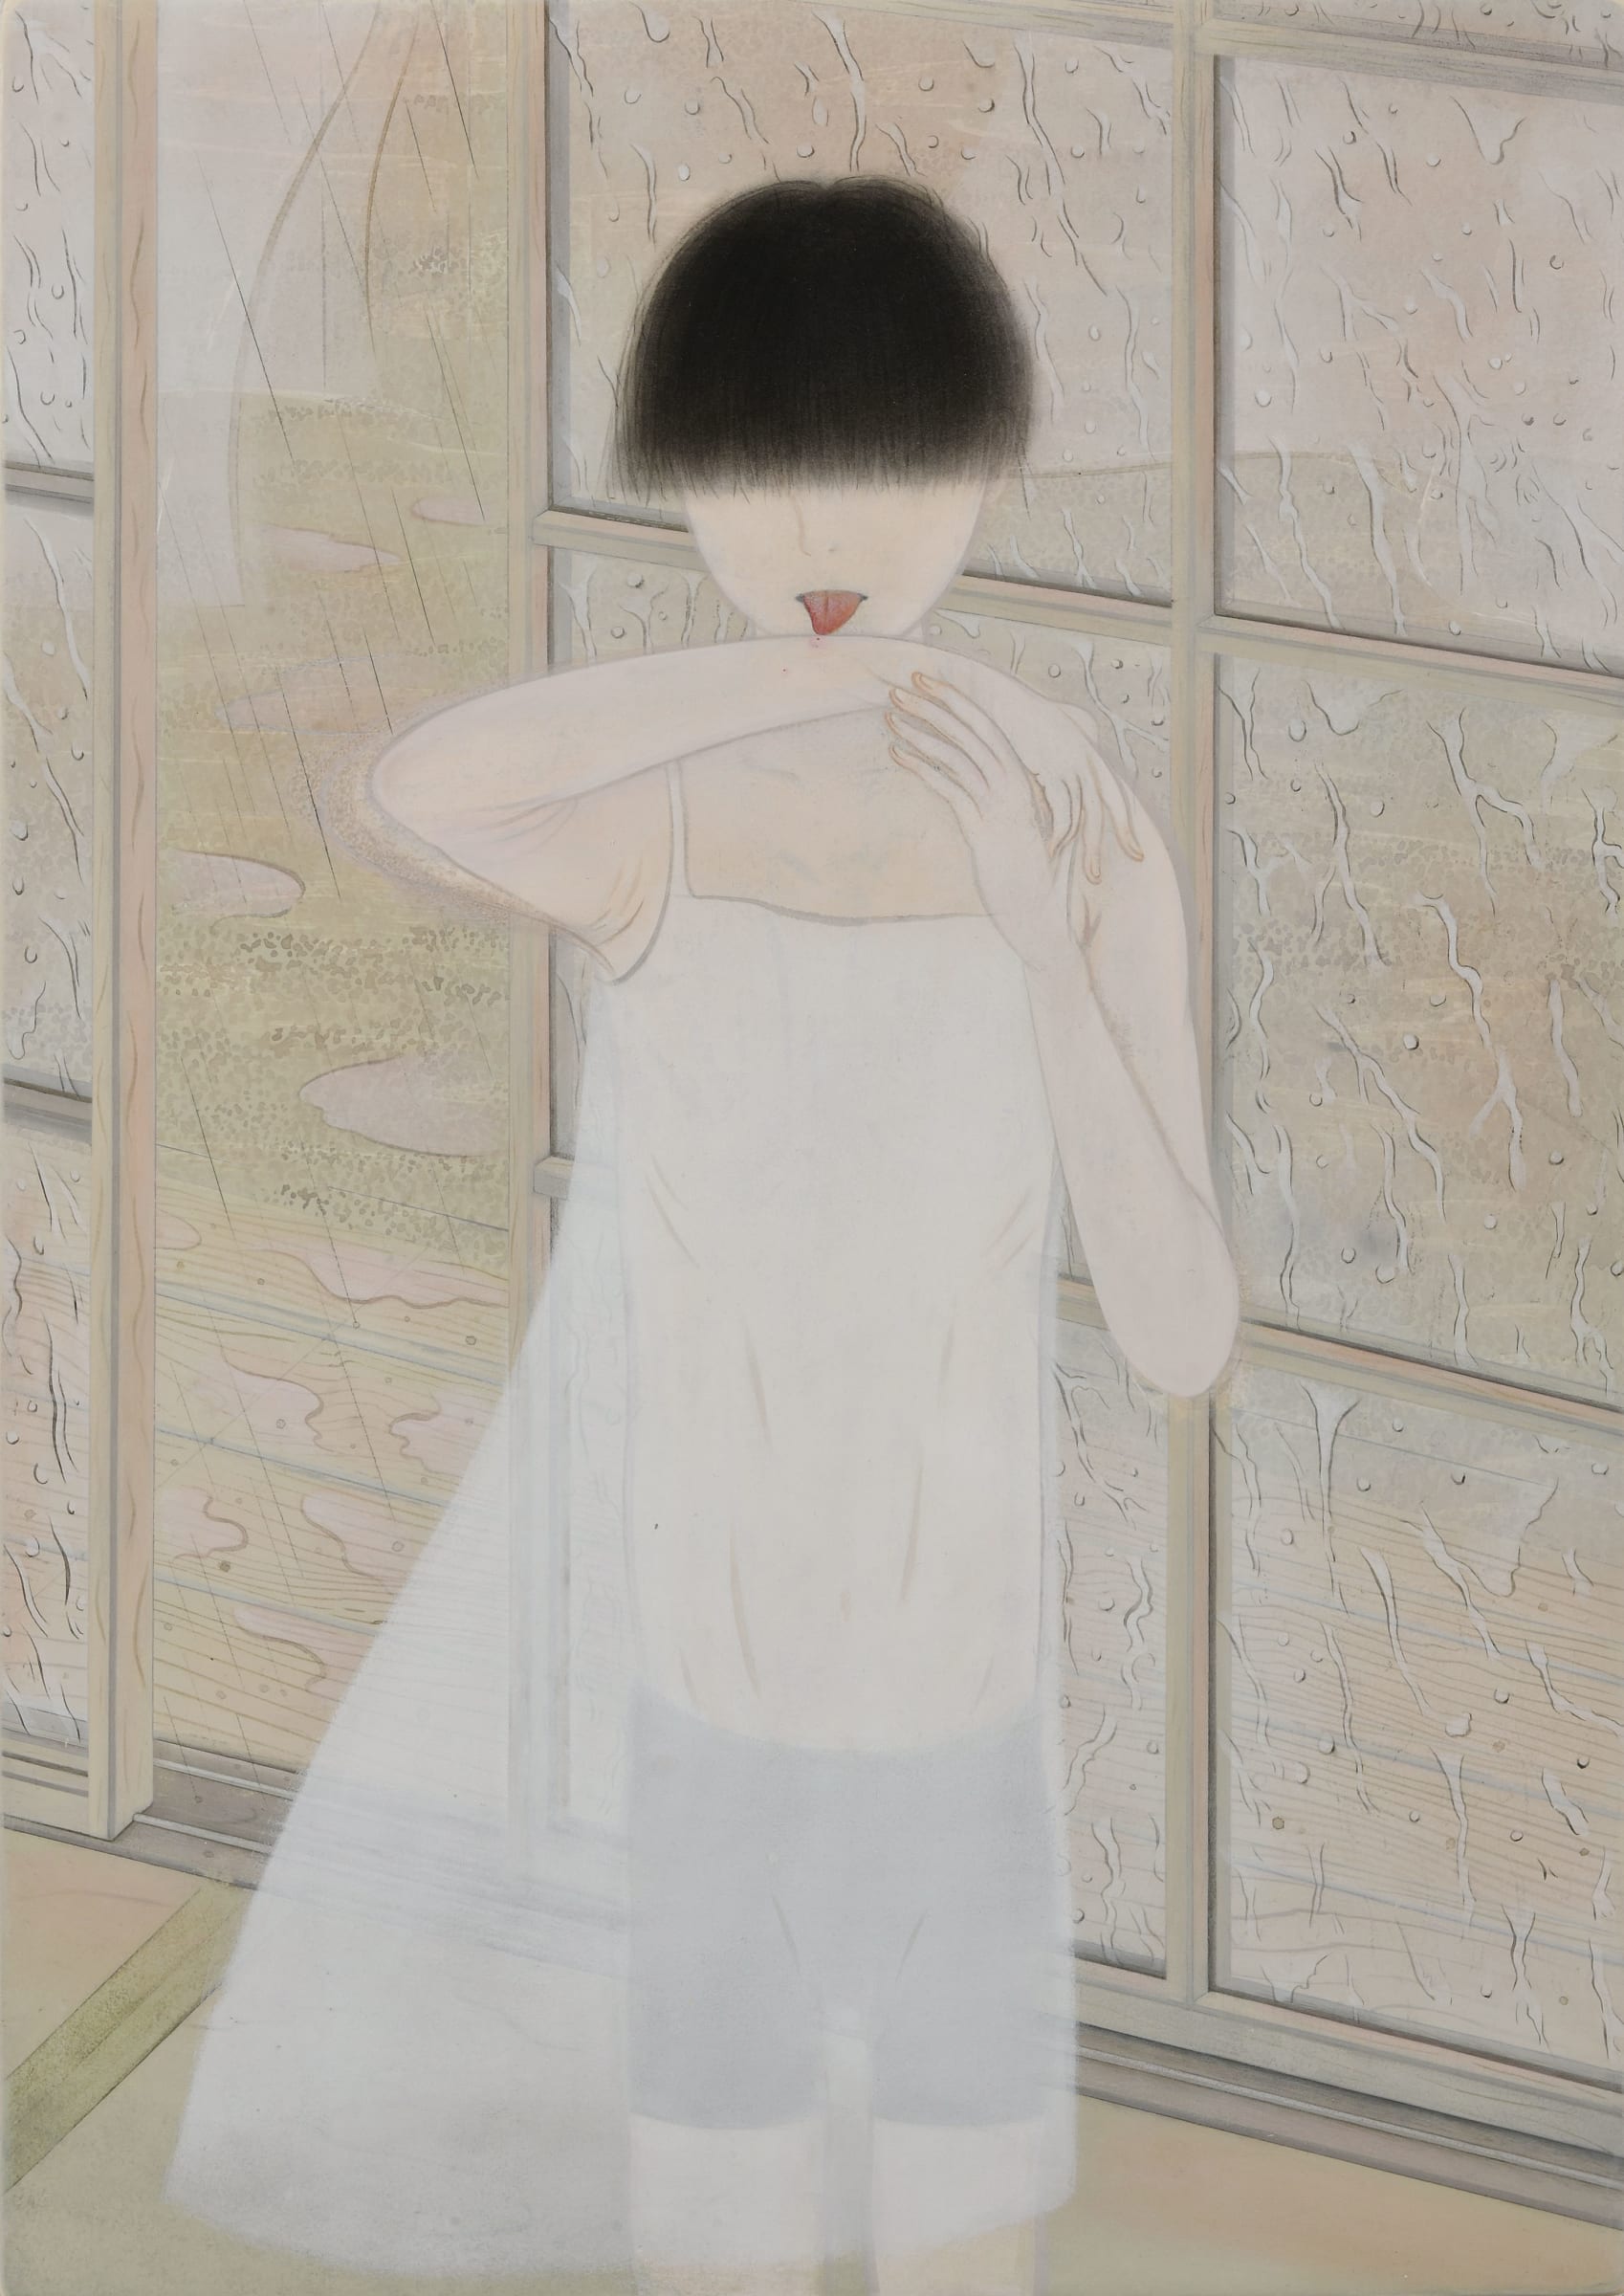 Tomoko Kashiki, I Don't Mind Getting Bitten as Long as It Won't Itch, 2020  | Ota Fine Arts Viewing Room